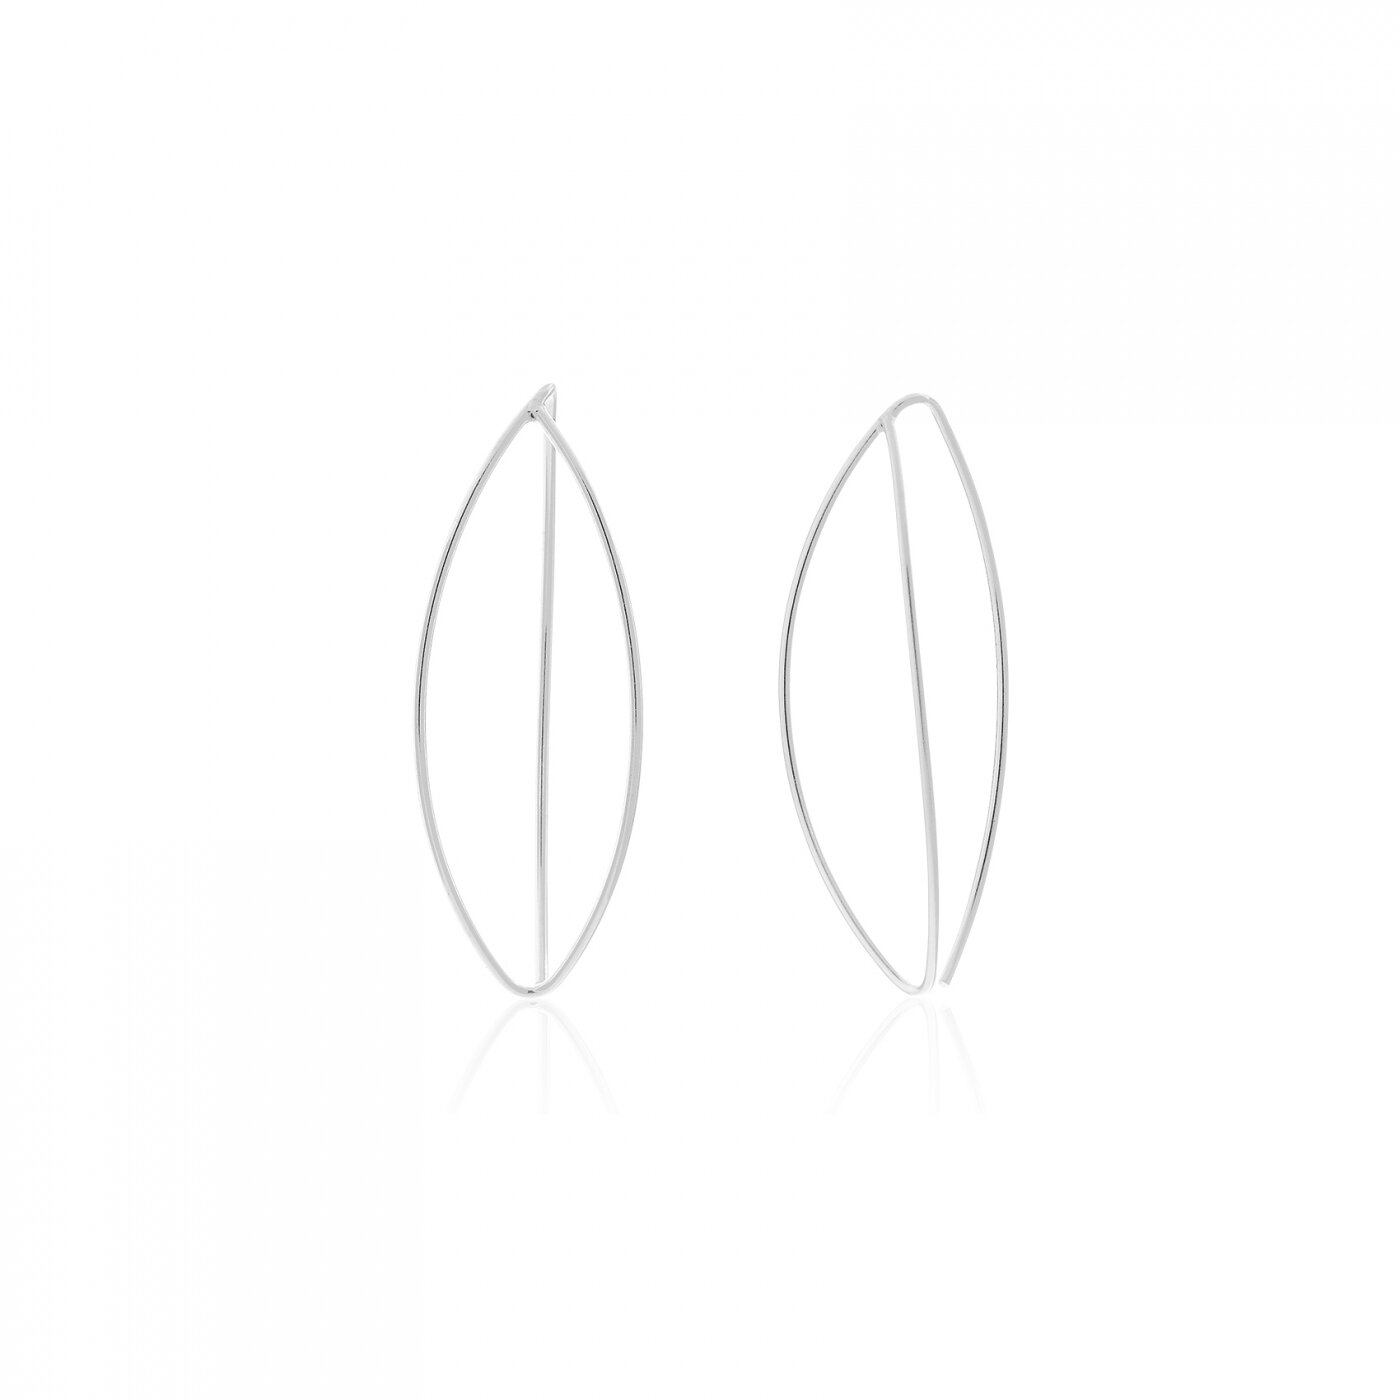 Draken Together-big-earrings-webb-1400x1400.jpg